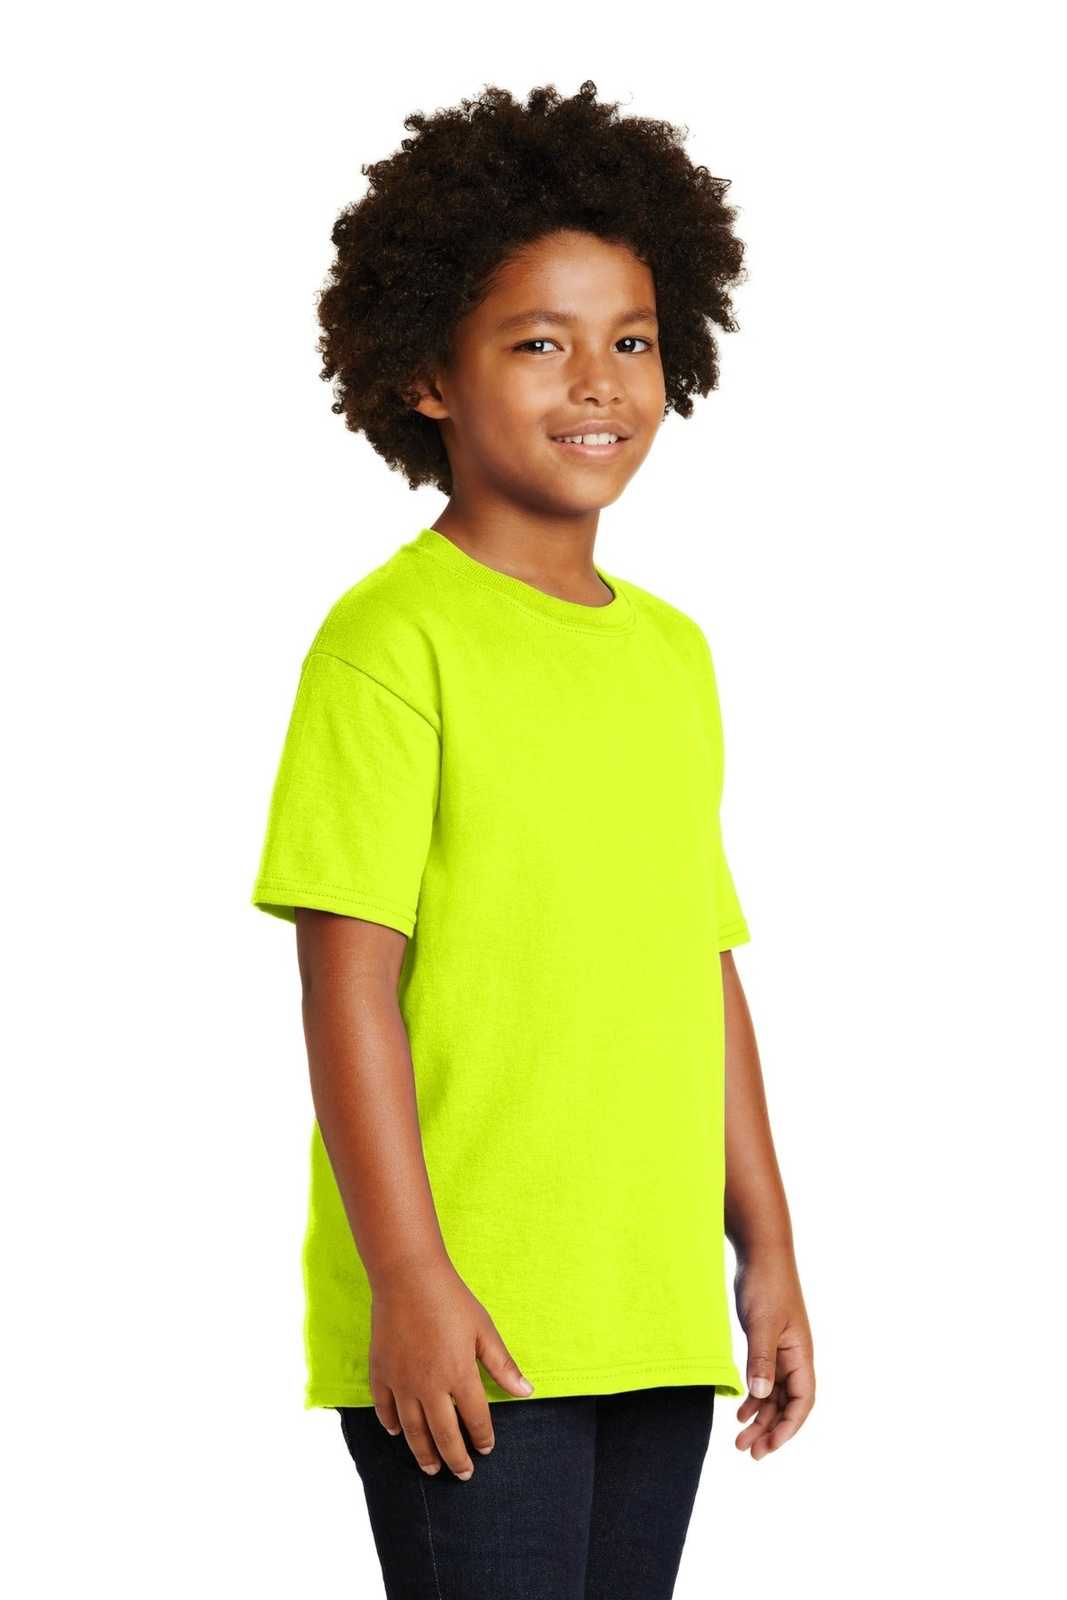 Gildan 2000B Youth Ultra Cotton 100% Cotton T-Shirt - Safety Green - HIT a Double